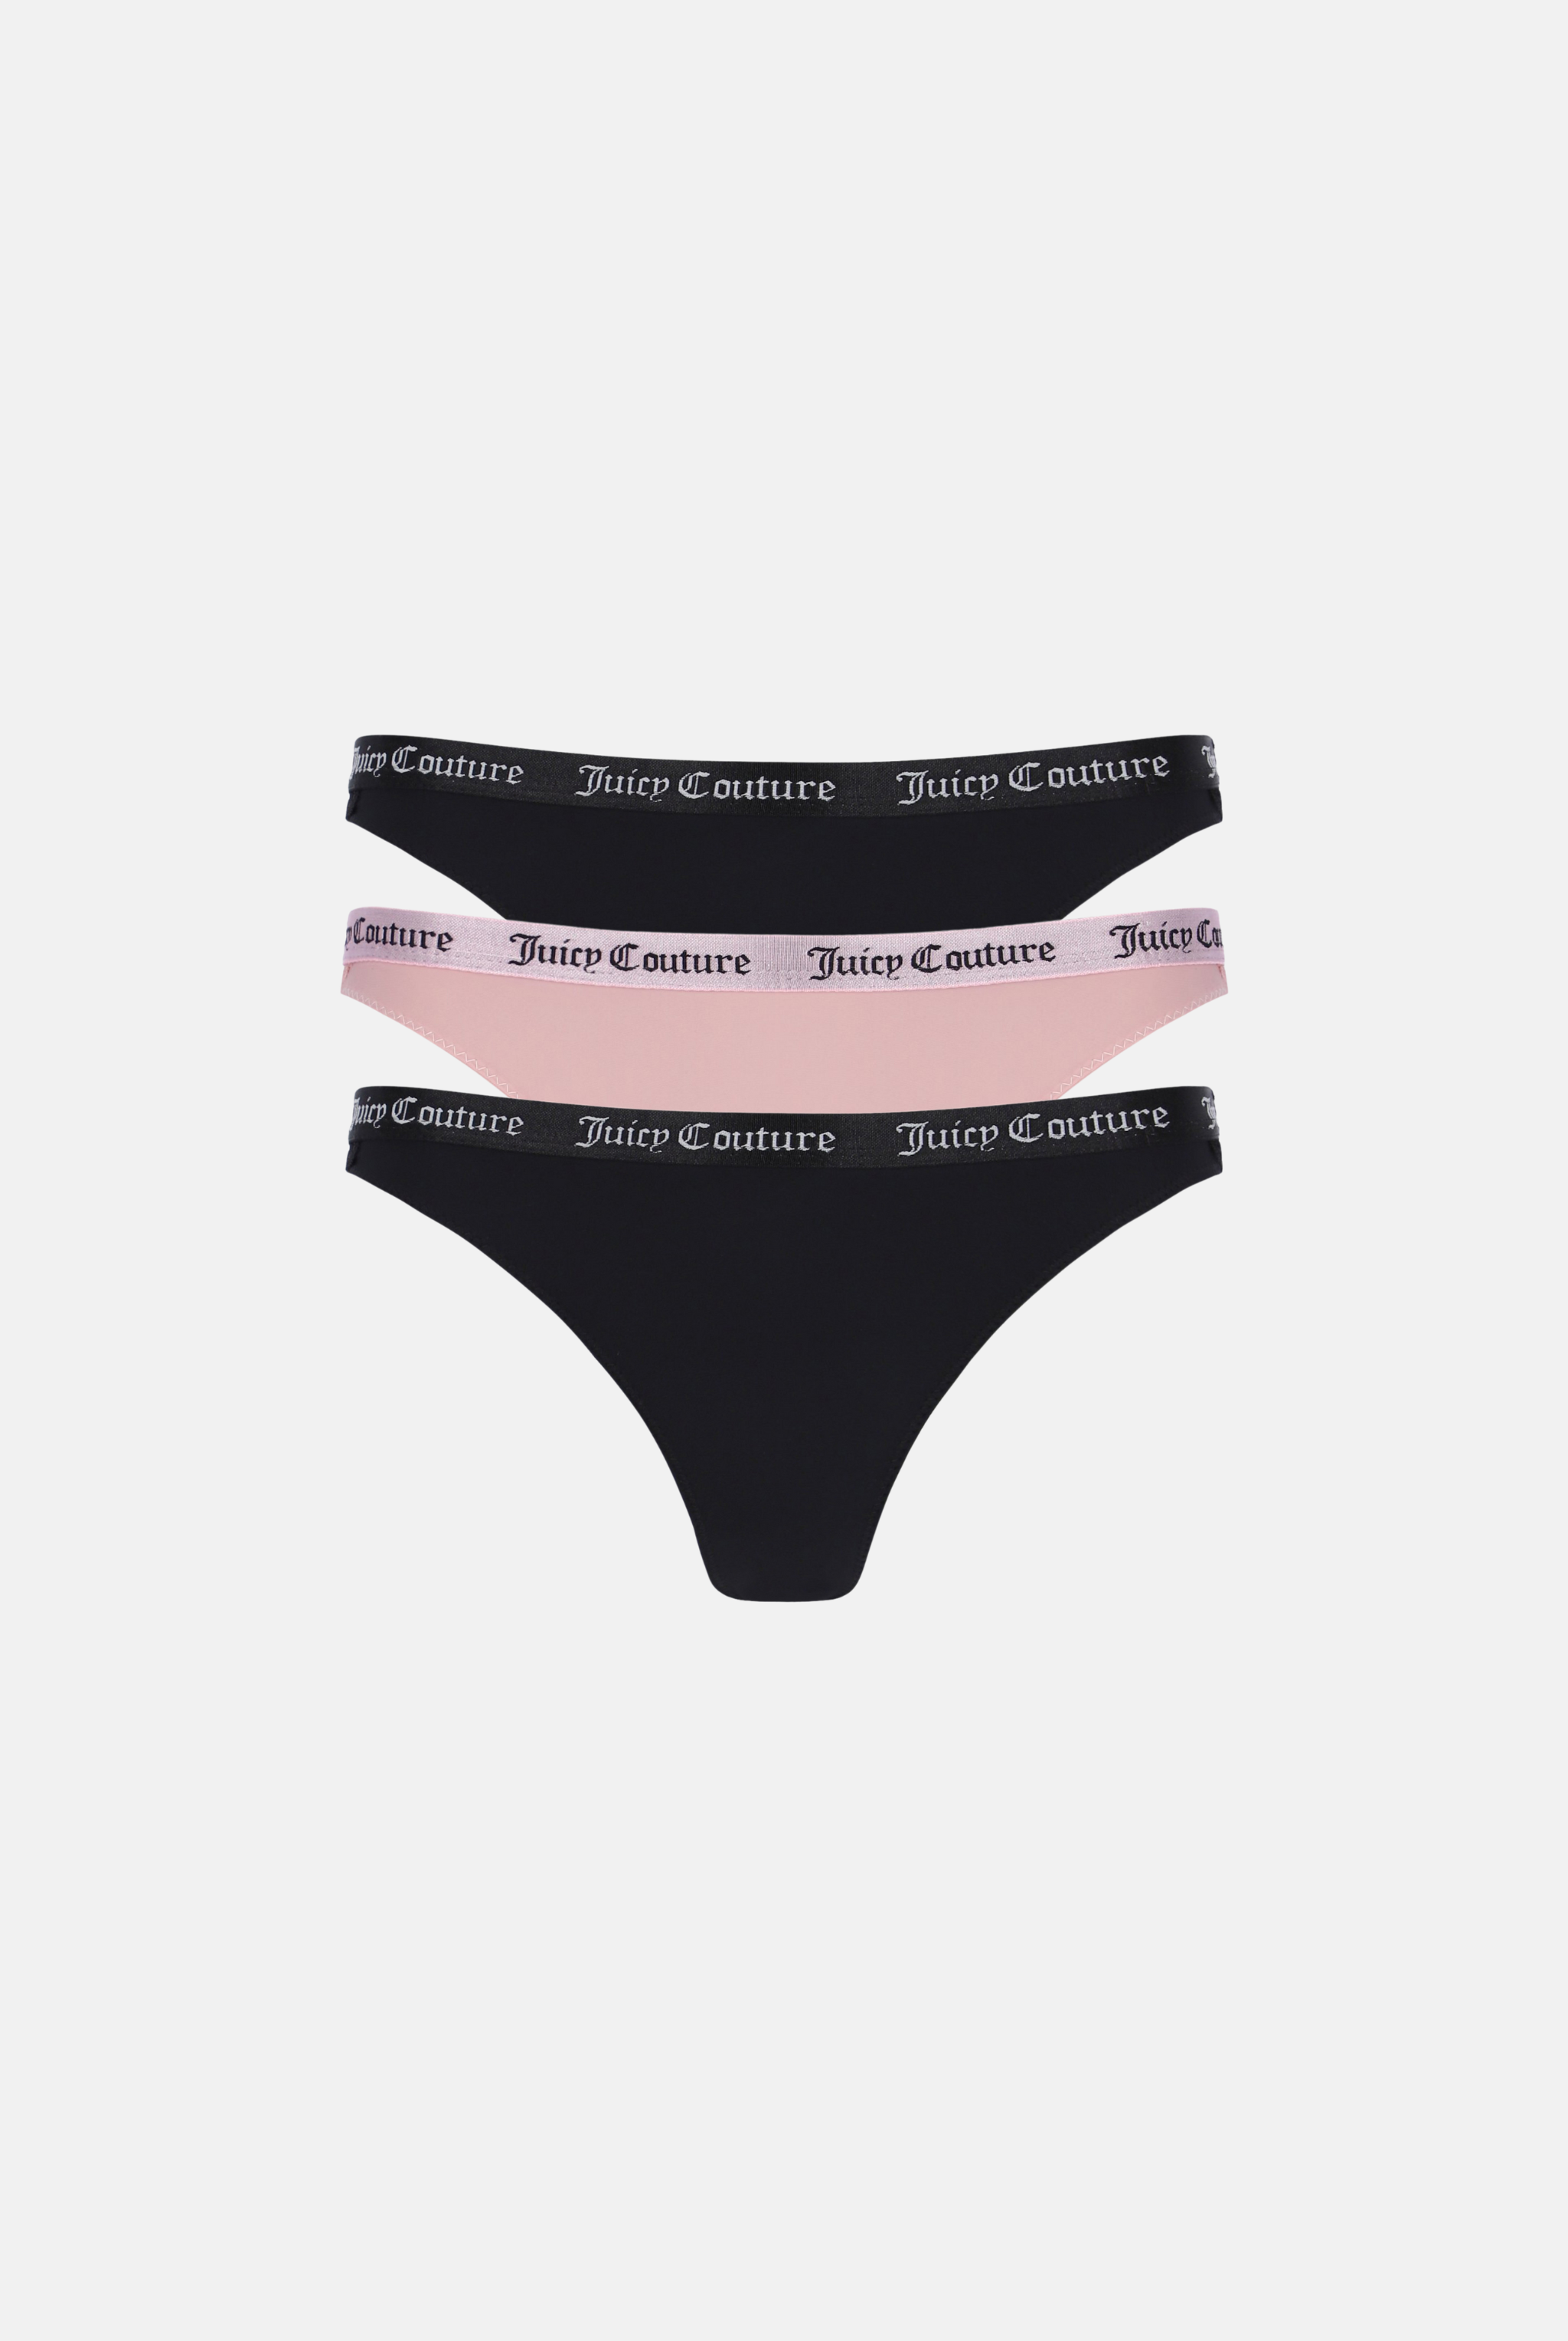 Juicy Couture Two Pieces Laced Black Underwear Lingerie Set UK